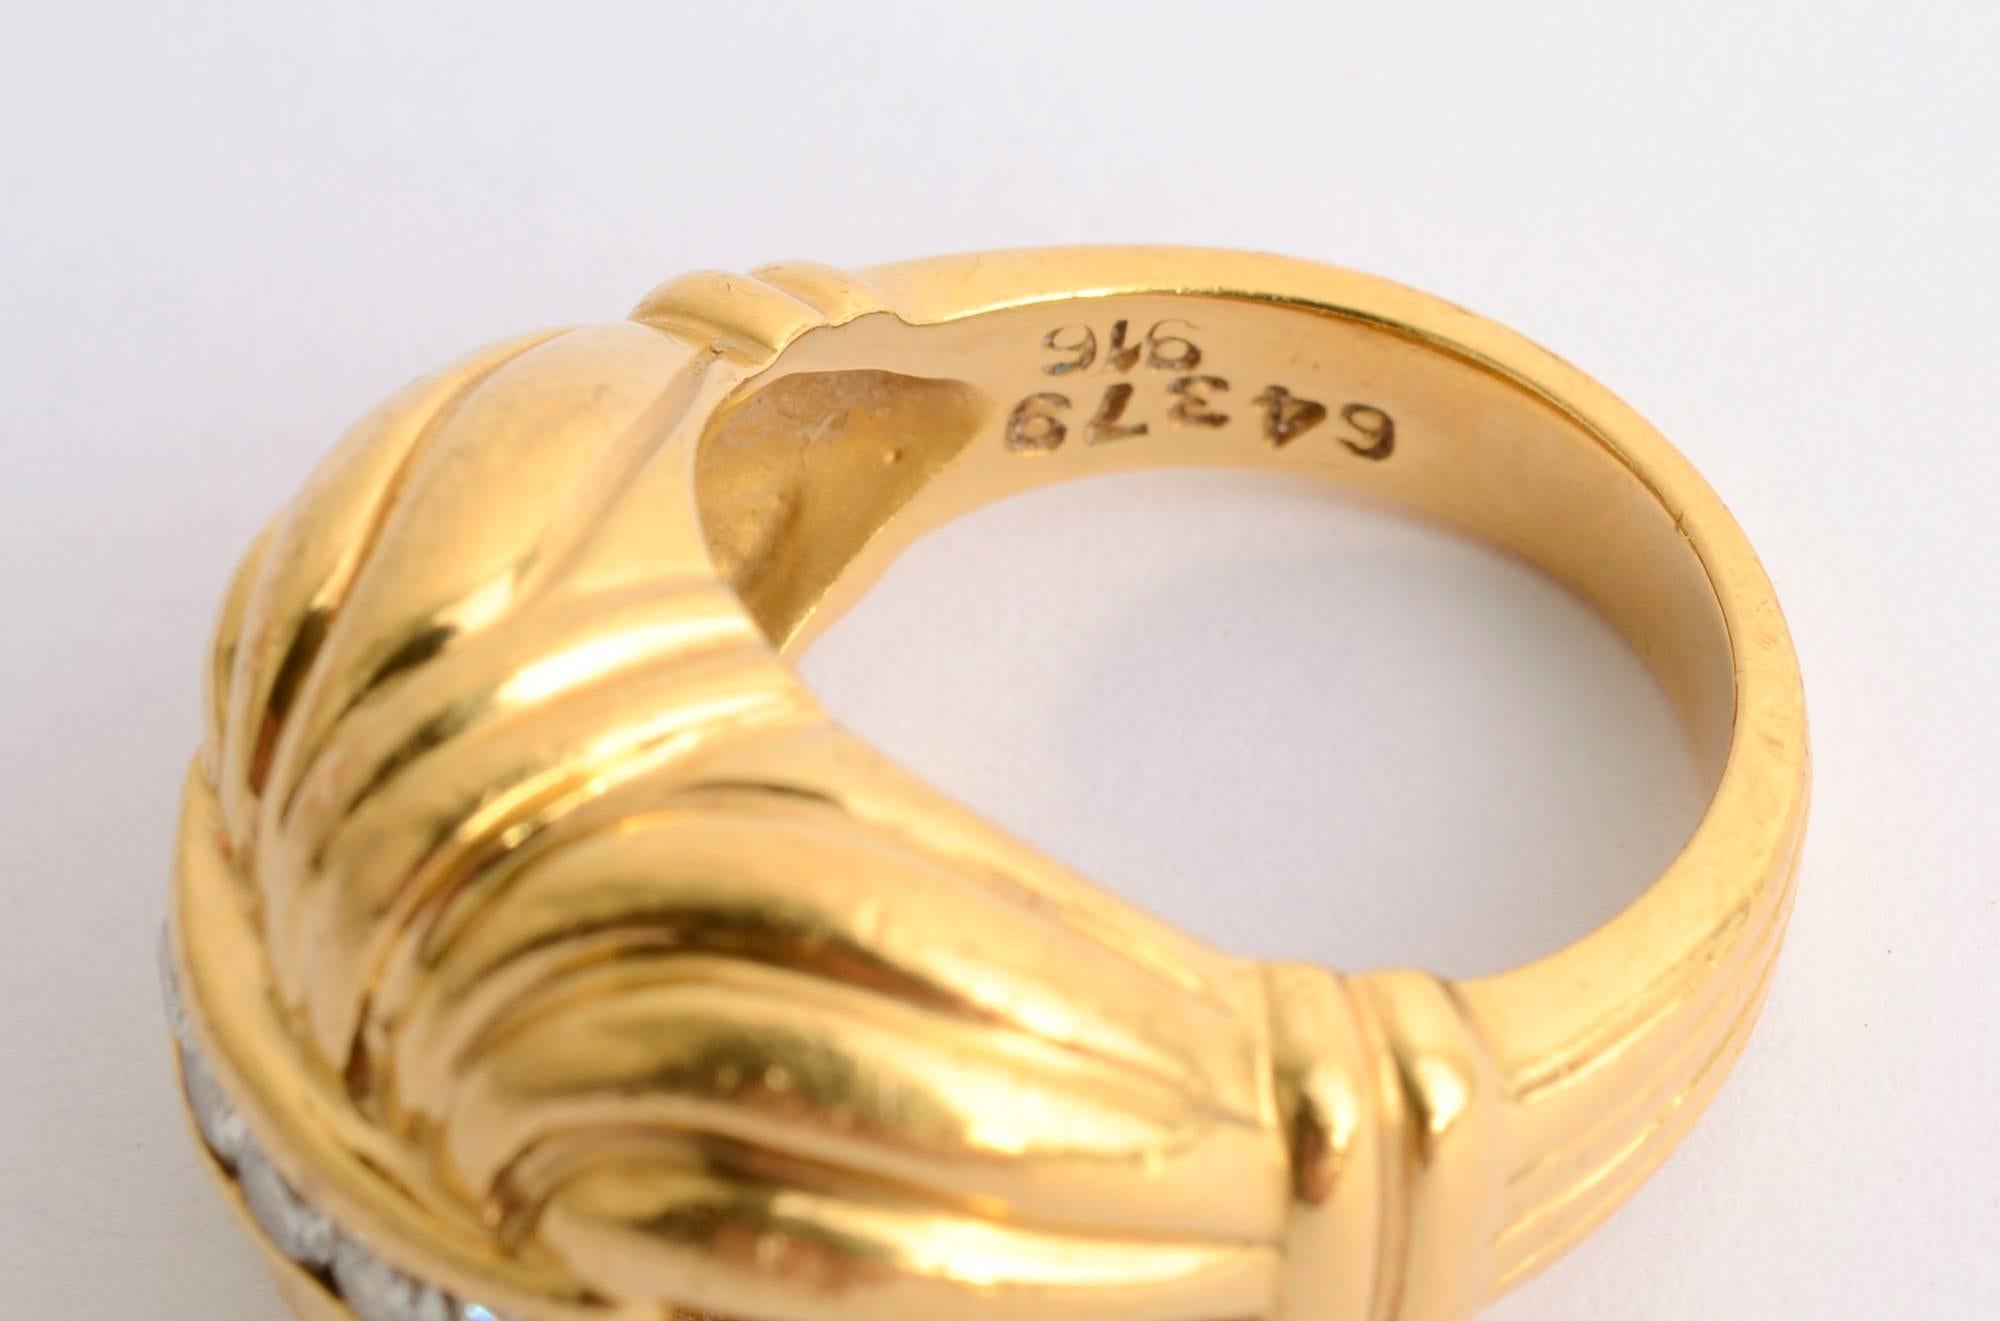 Brilliant Cut Lagos Gold and Diamond Ring